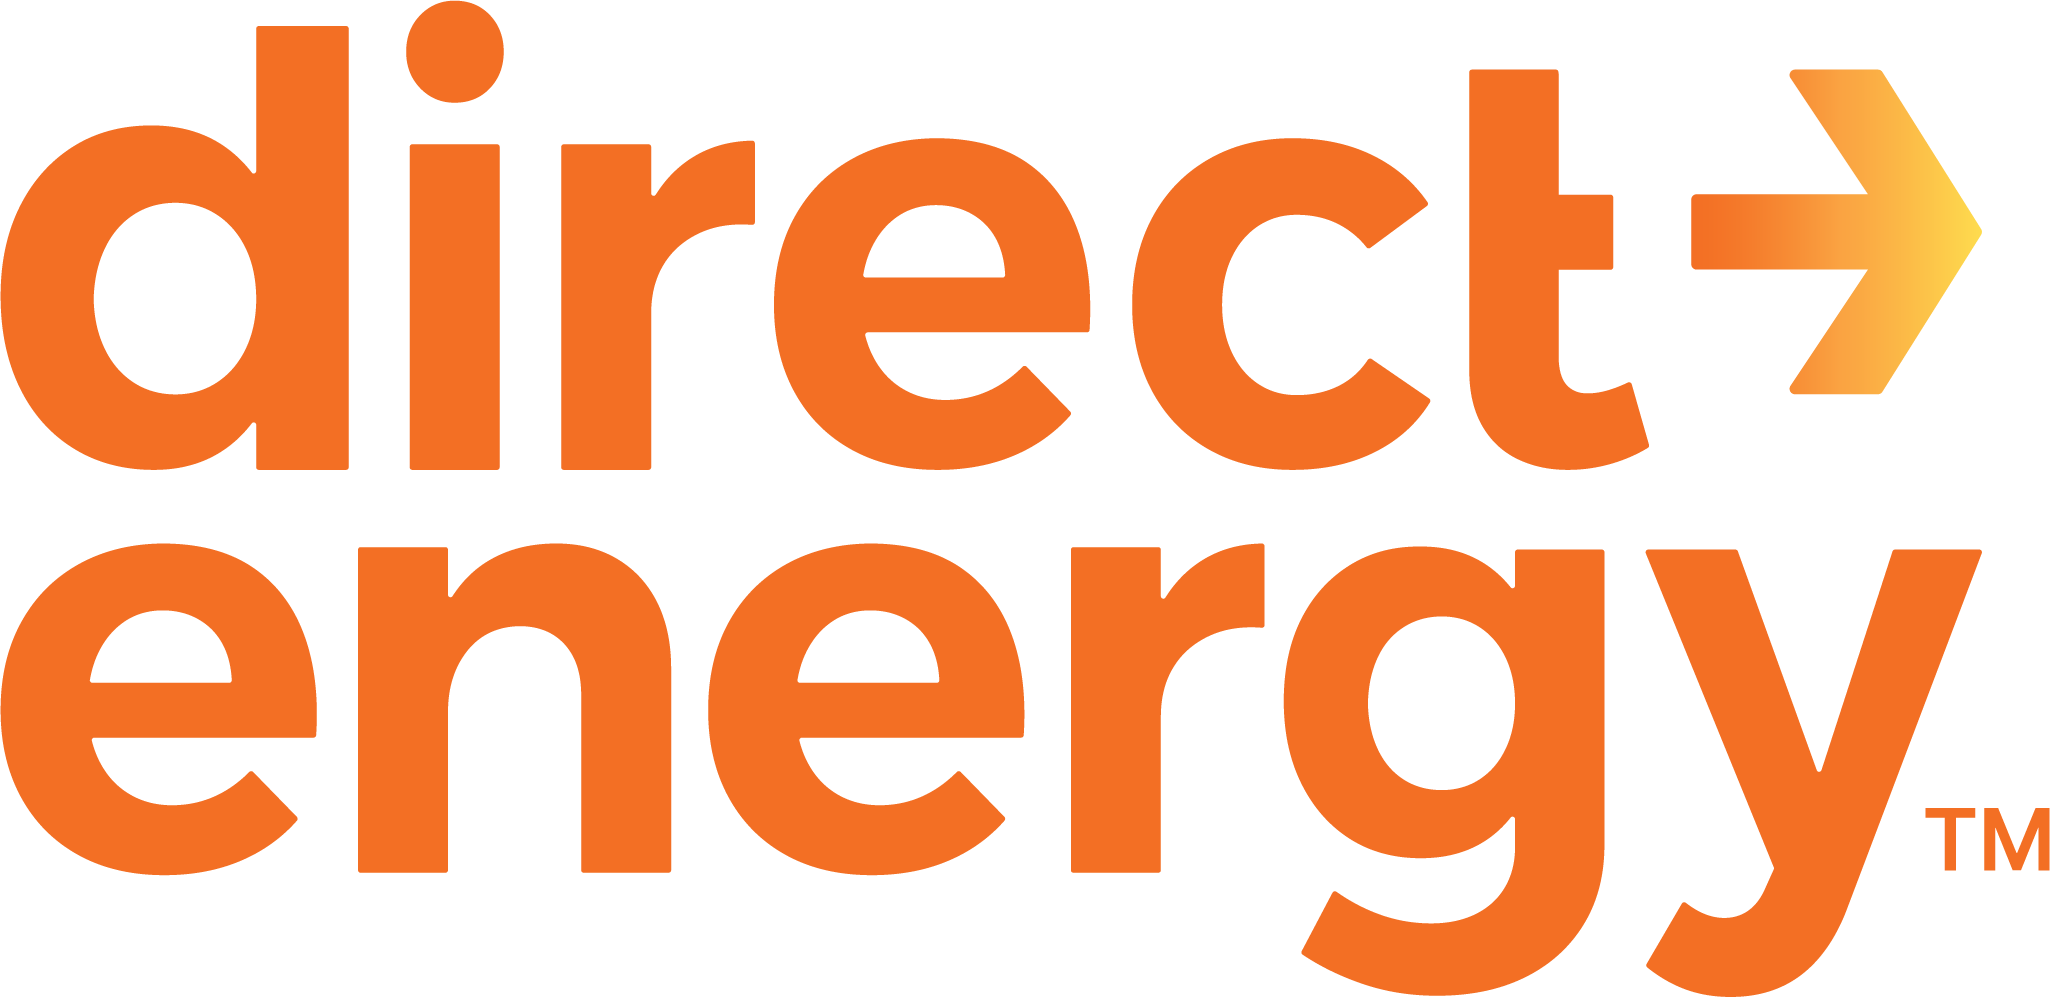 direct-logo